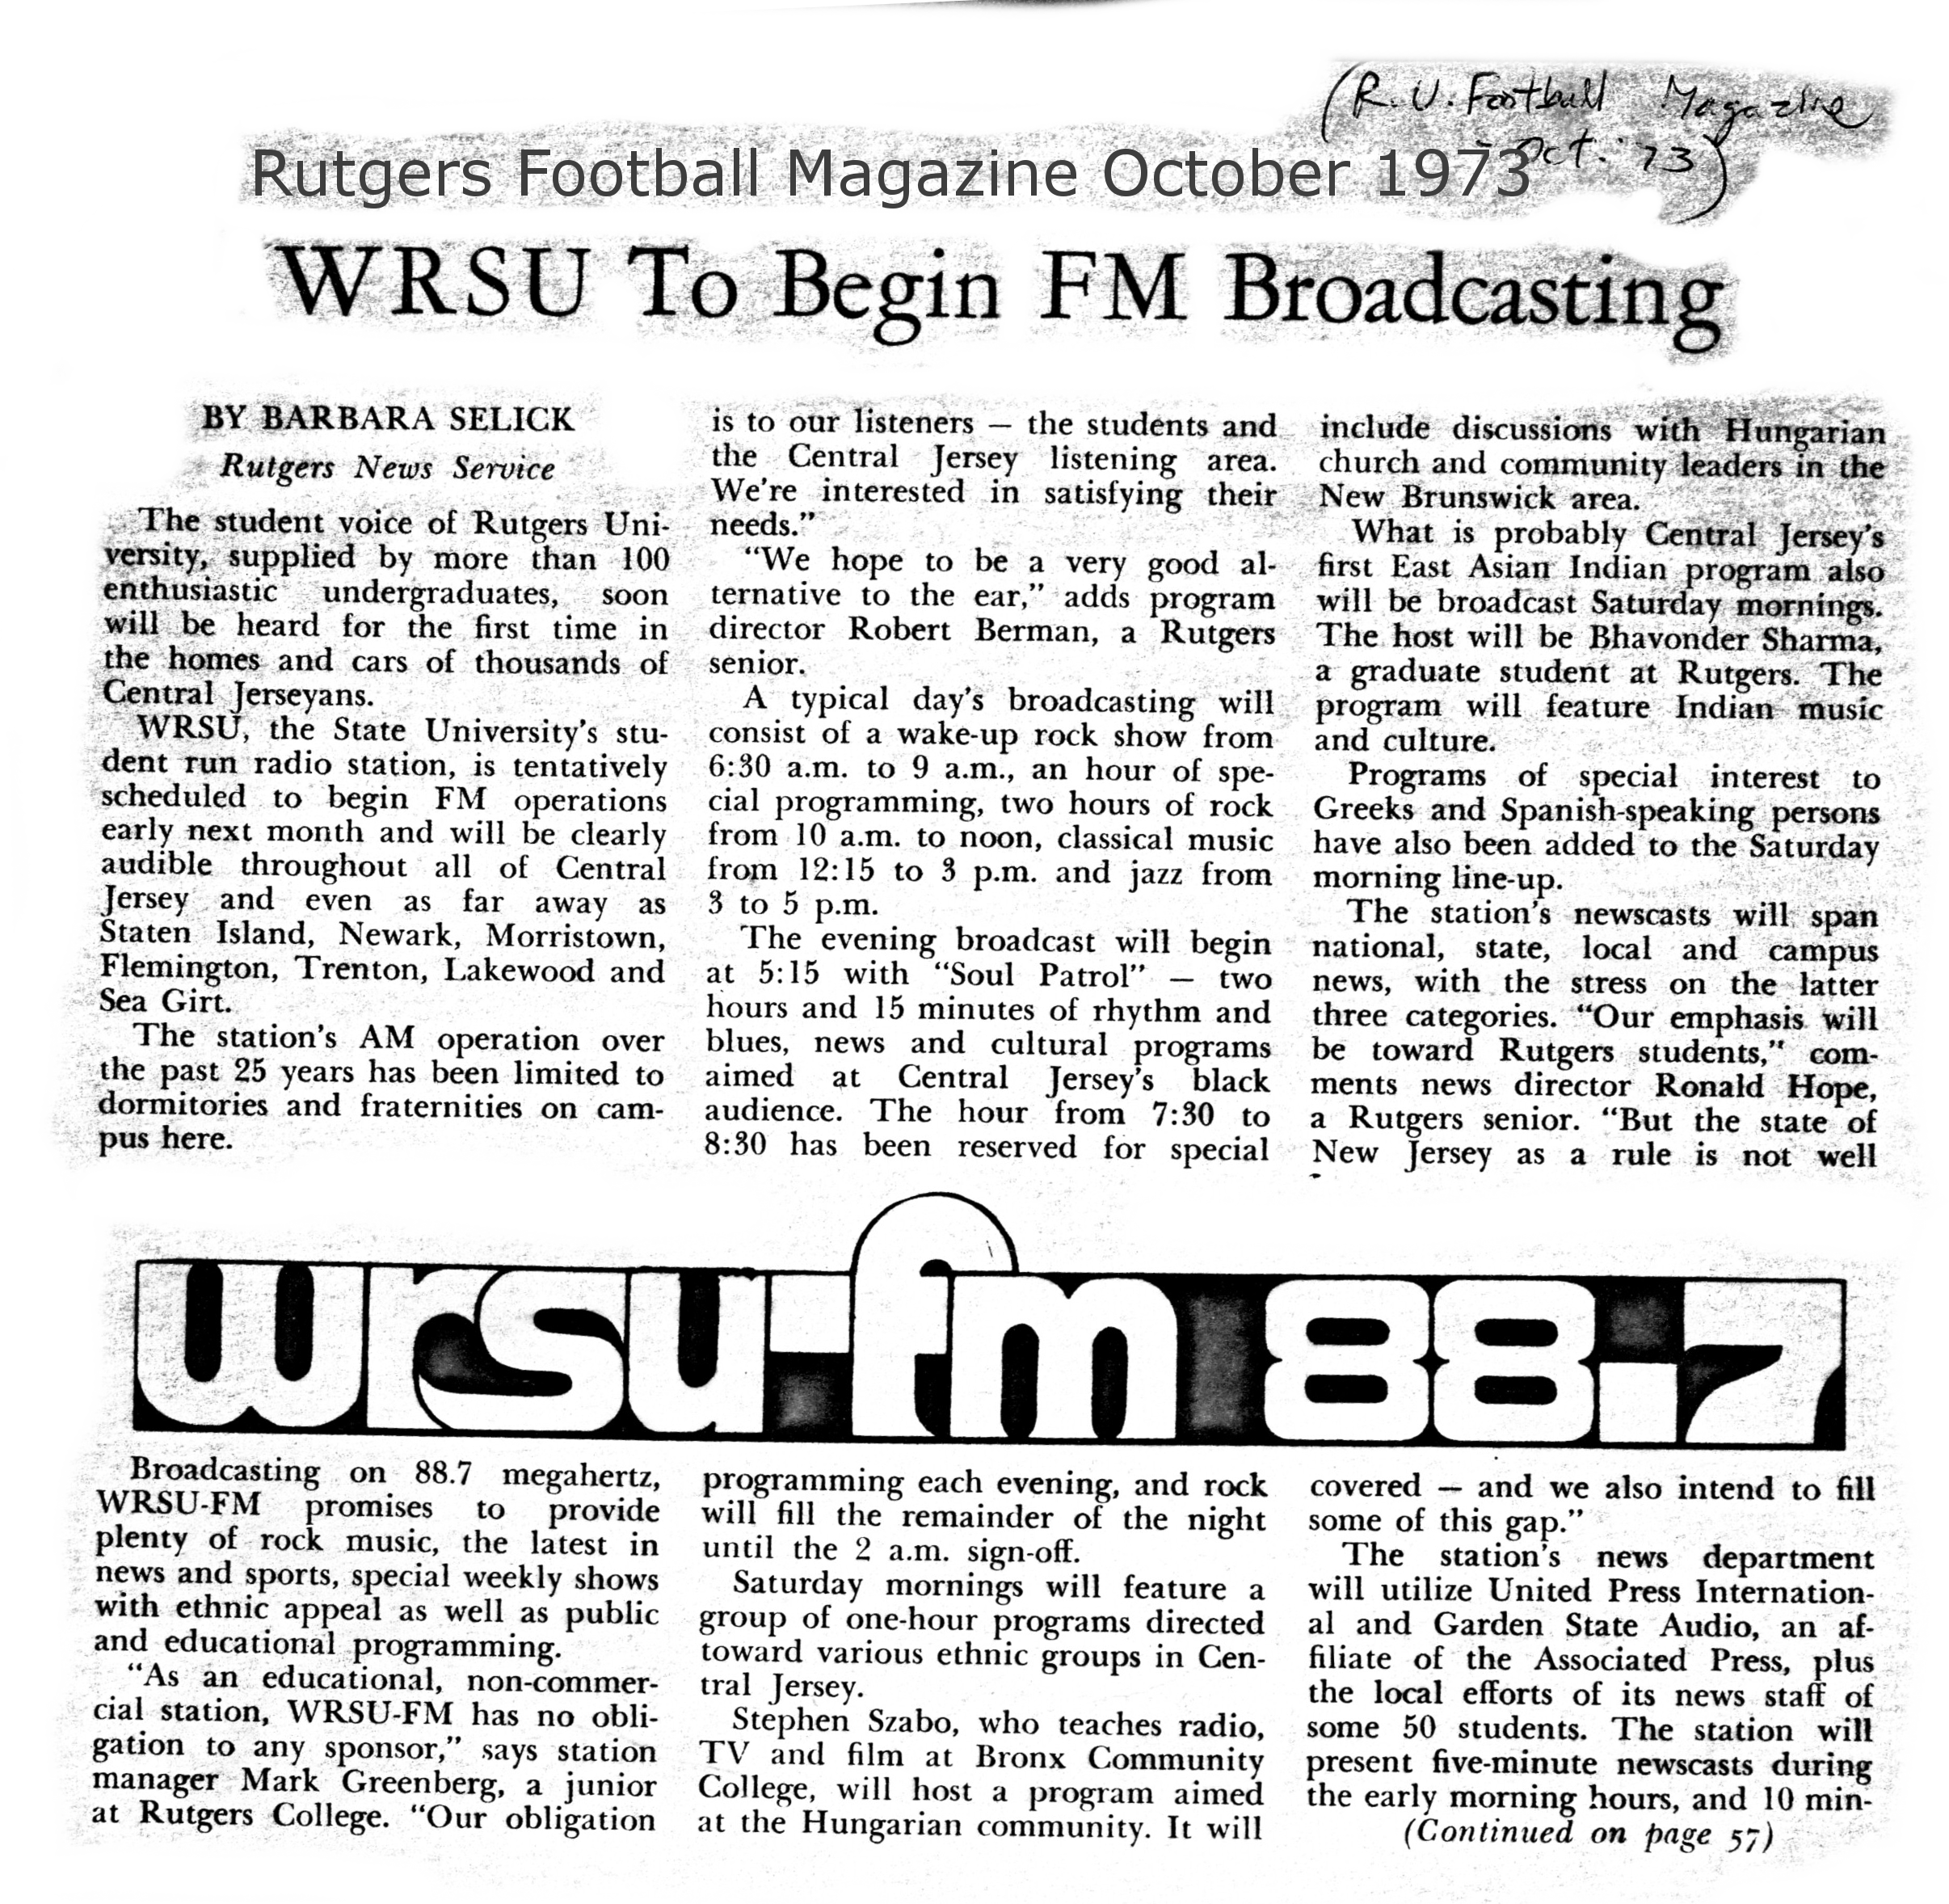 1973 - FM is coming along - Rutgers Football Magazine